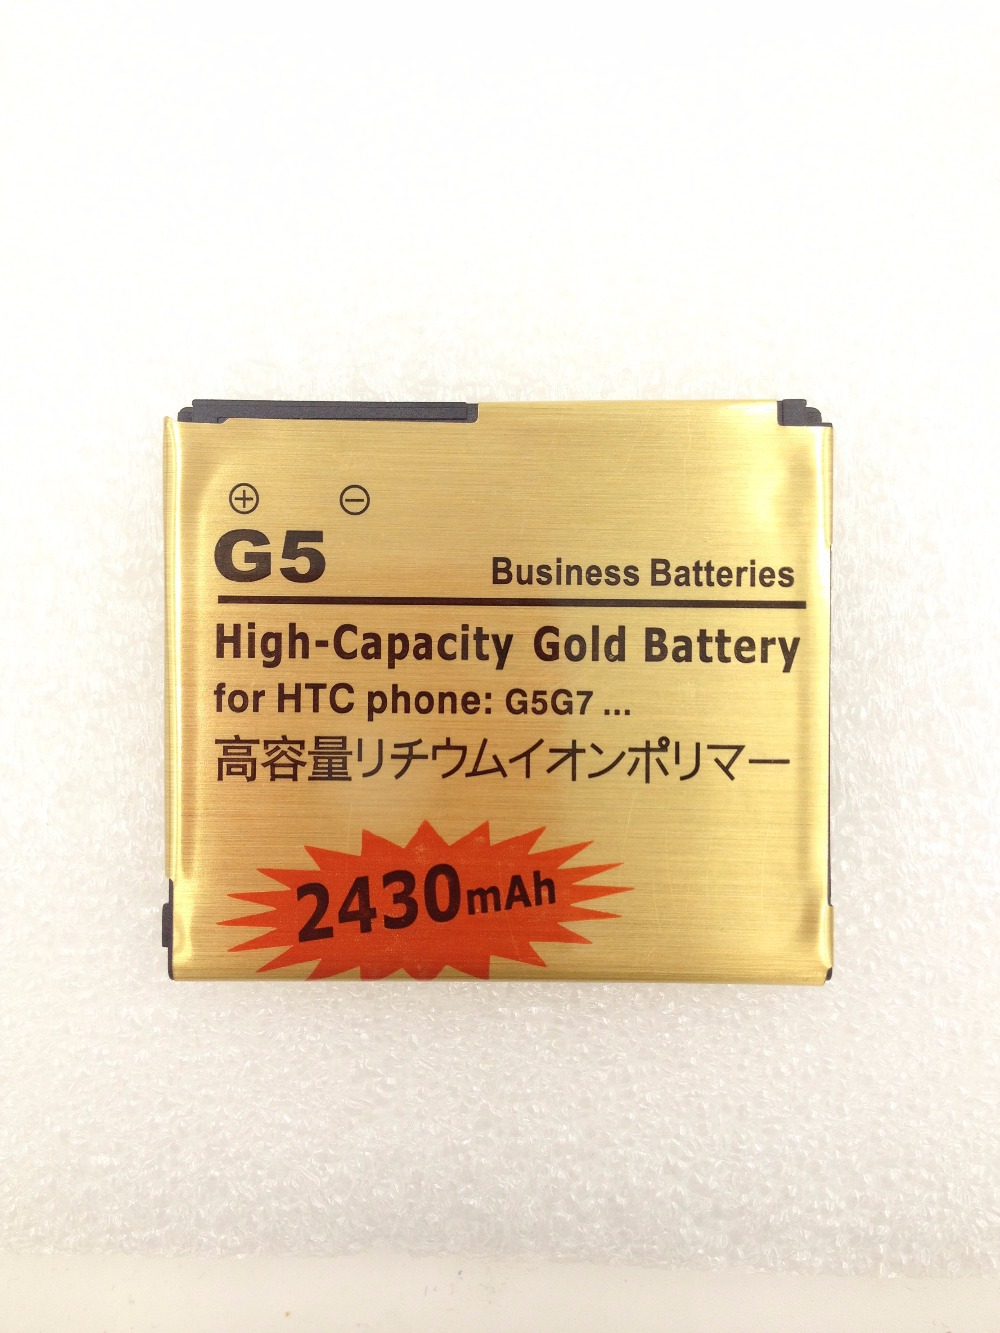 2430mAh Gold Battery For HTC Desire A8181 G5 Google Nexus One G7